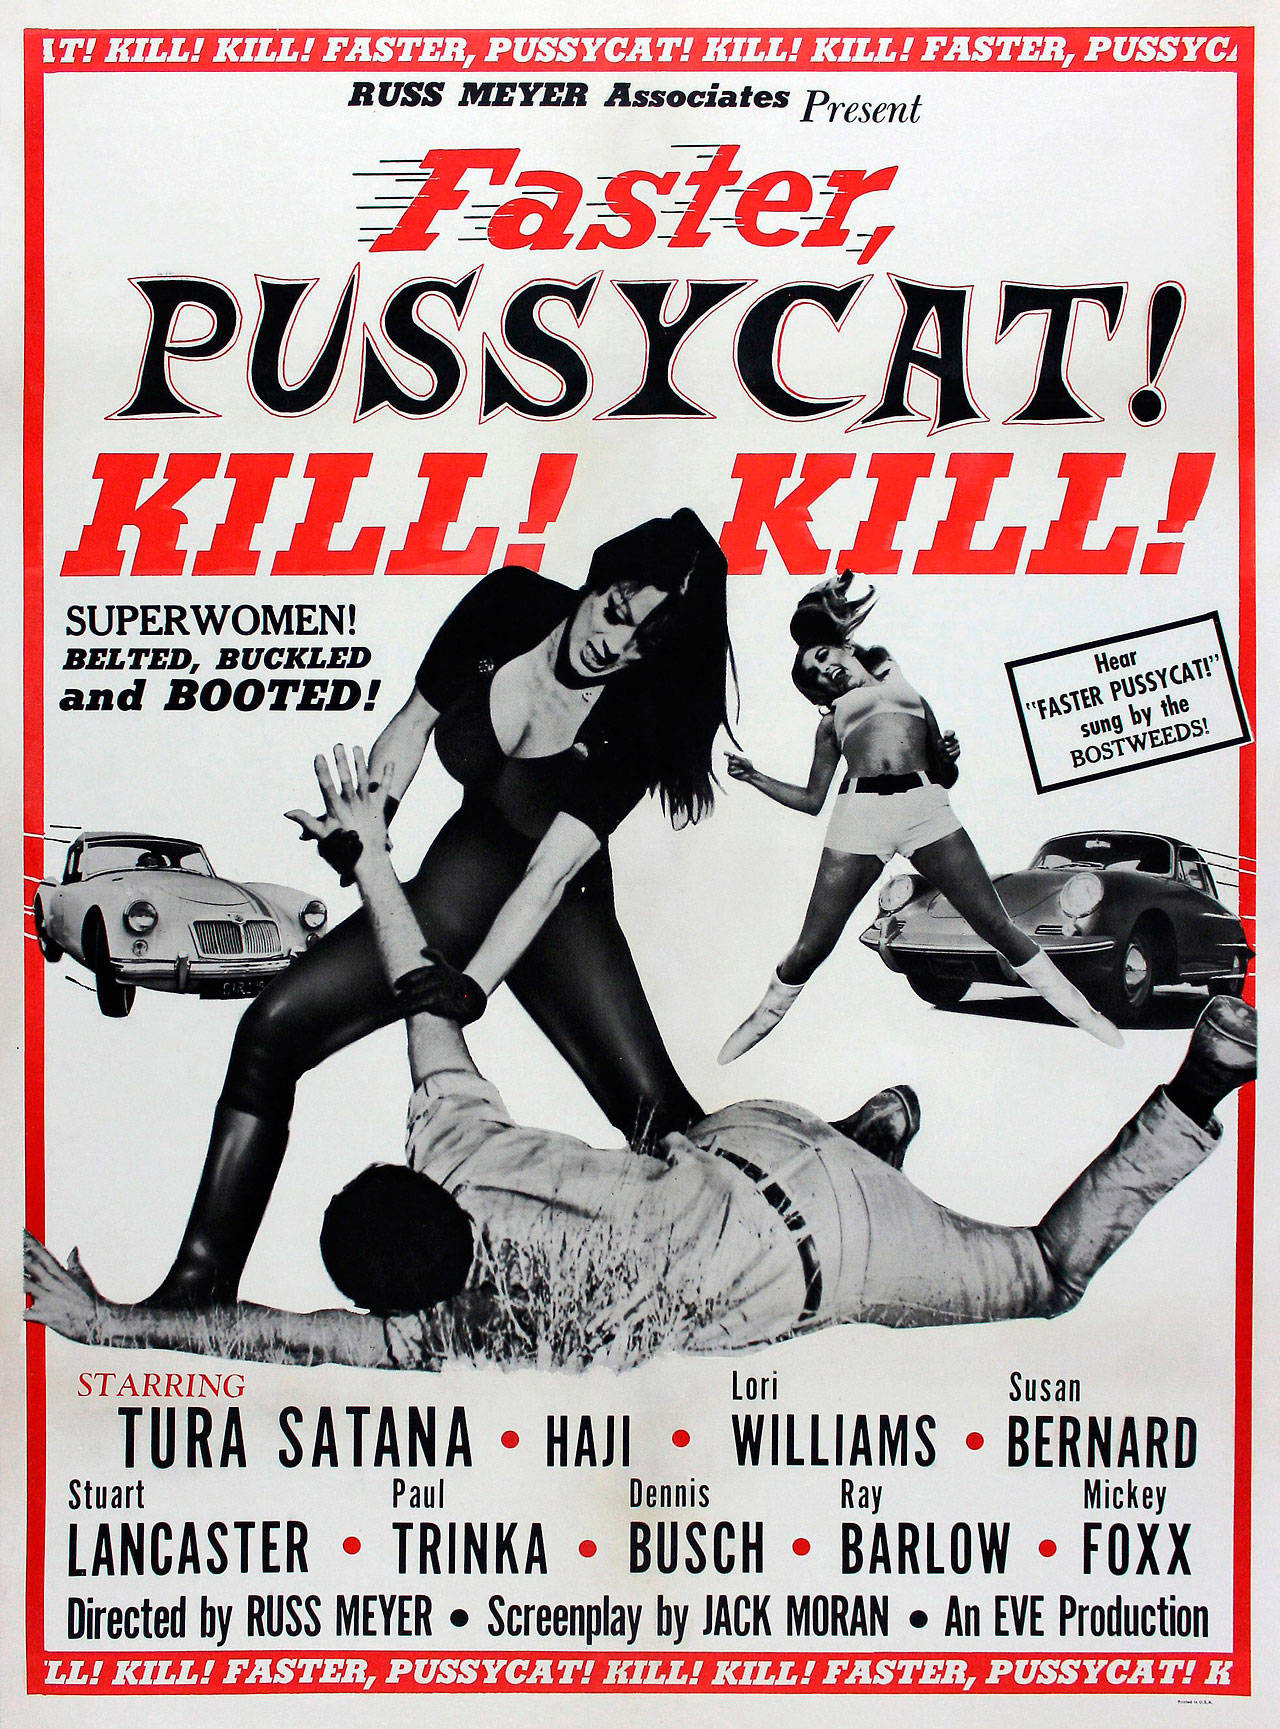 Image courtesy of RM Films International | “Faster, Pussycat! Kill! Kill!” (1965)